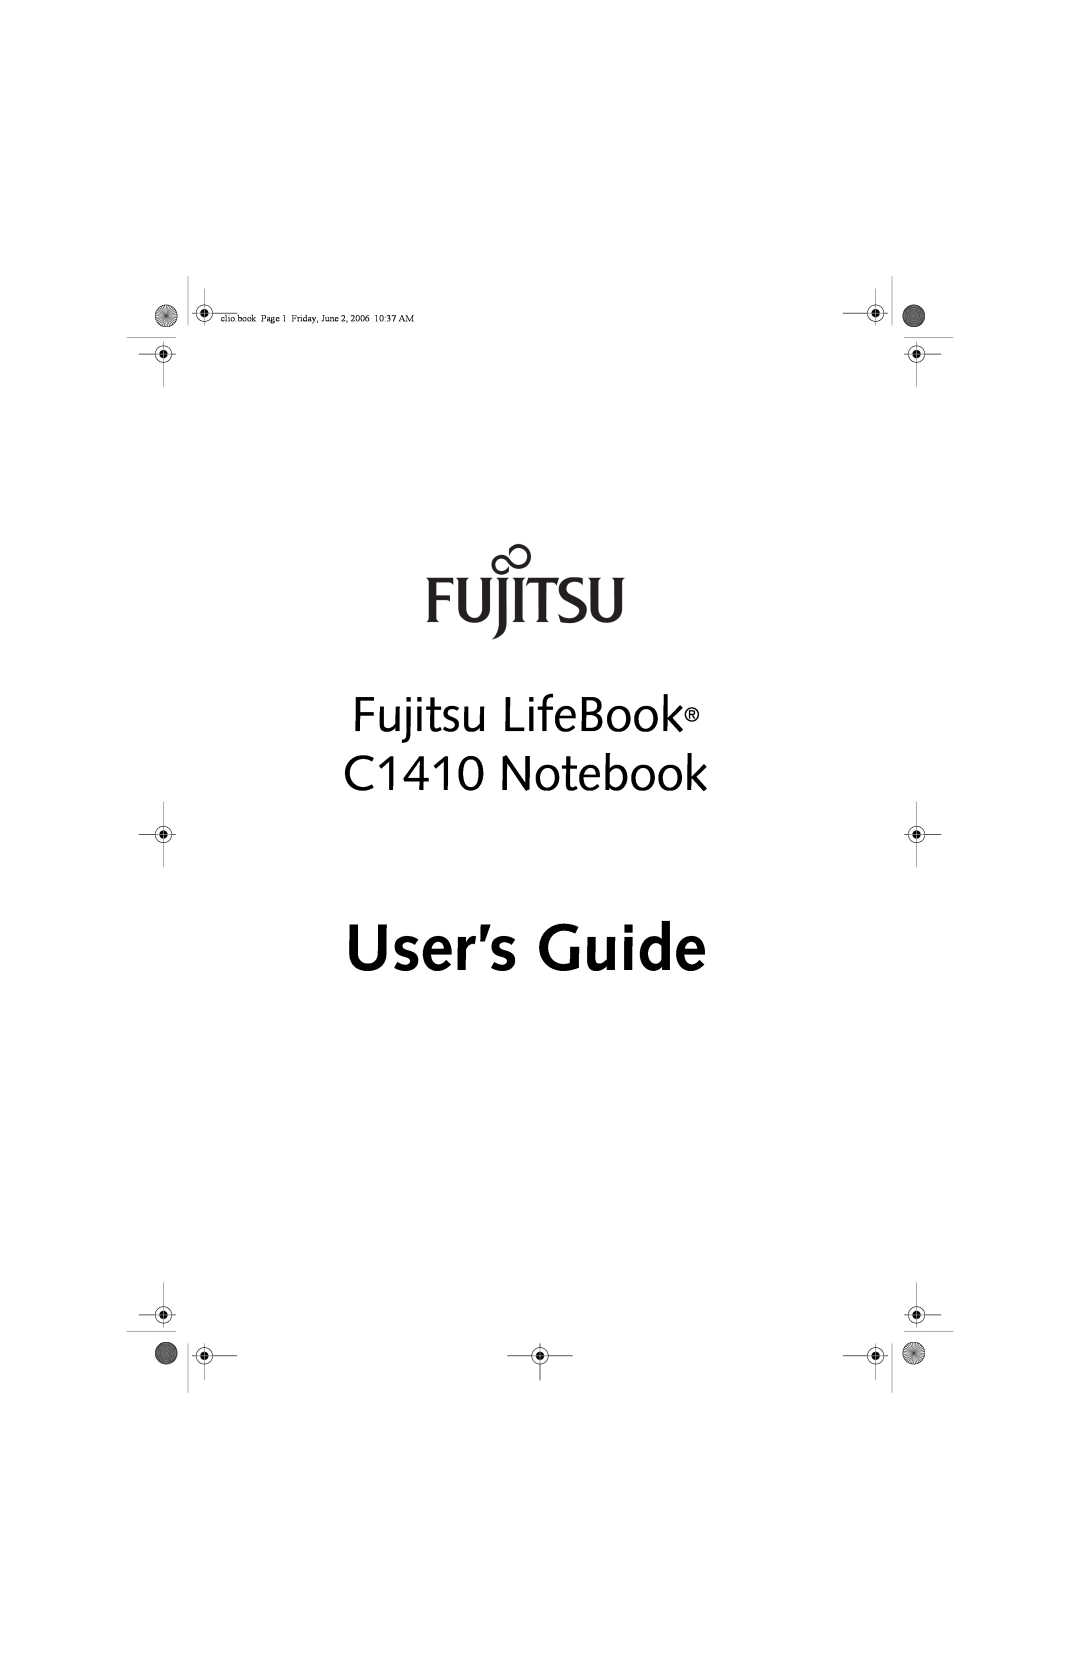 Fujitsu manual User’s Guide, Fujitsu LifeBook C1410 Notebook 